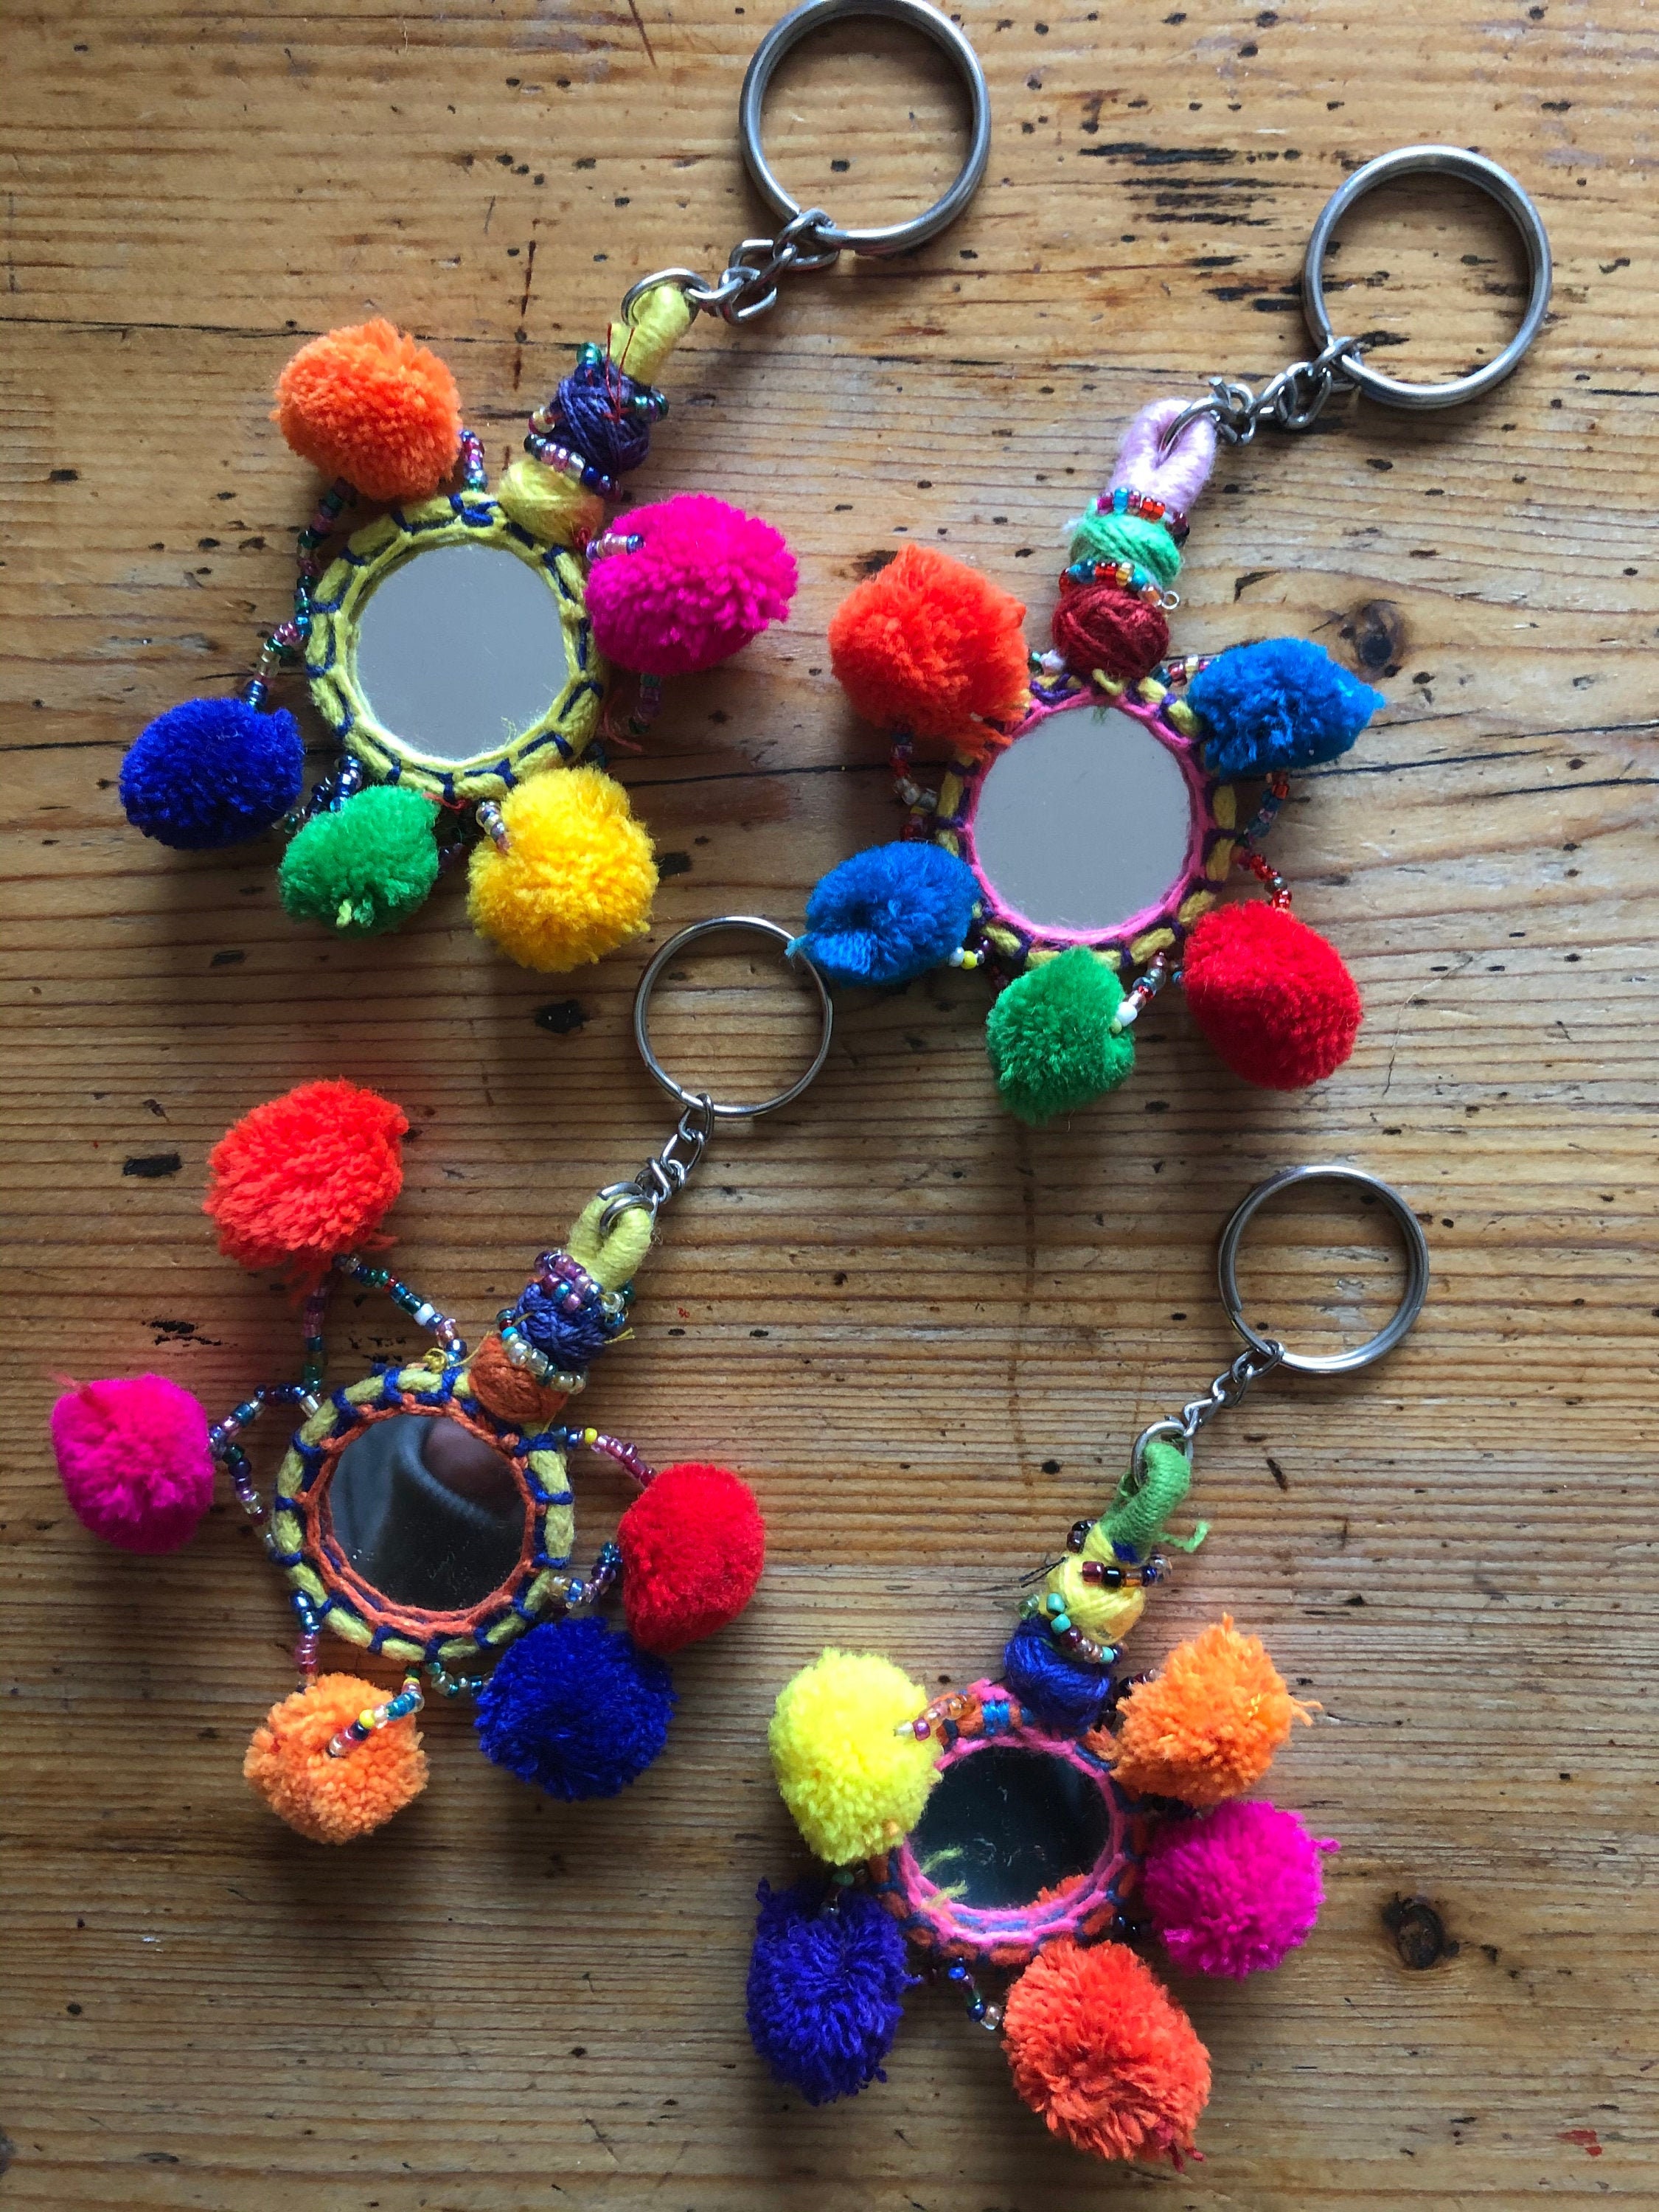 Colorful Boho Pom Pom Tassel Bag Charm Key Chain - LittleForBig Cute & Sexy  Products